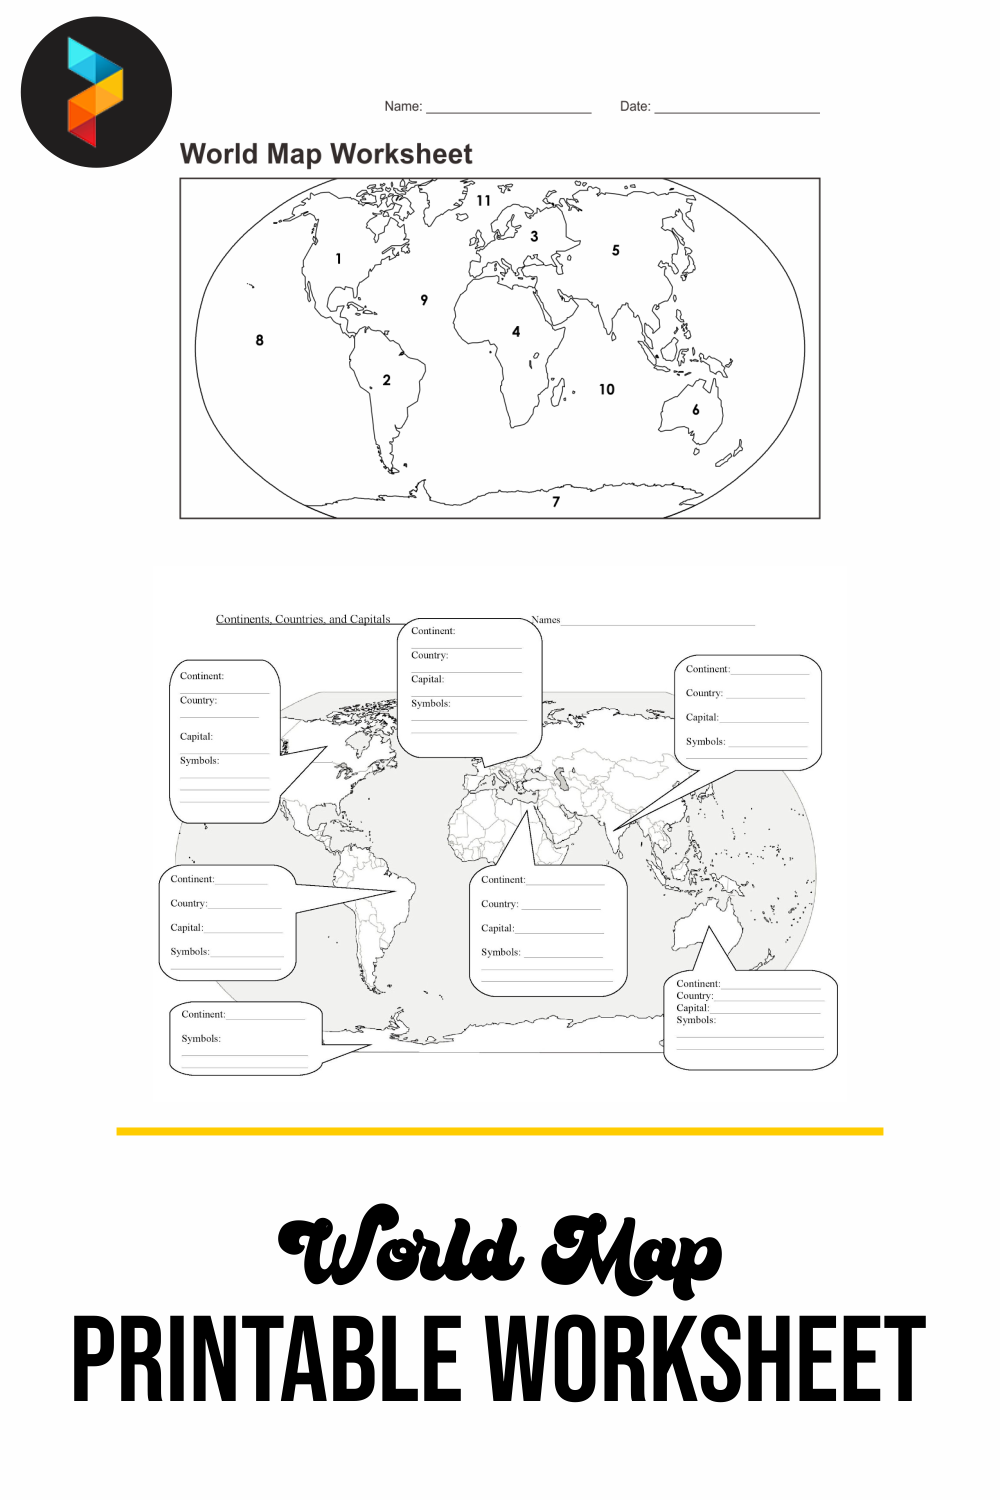 World Map Printable Worksheet